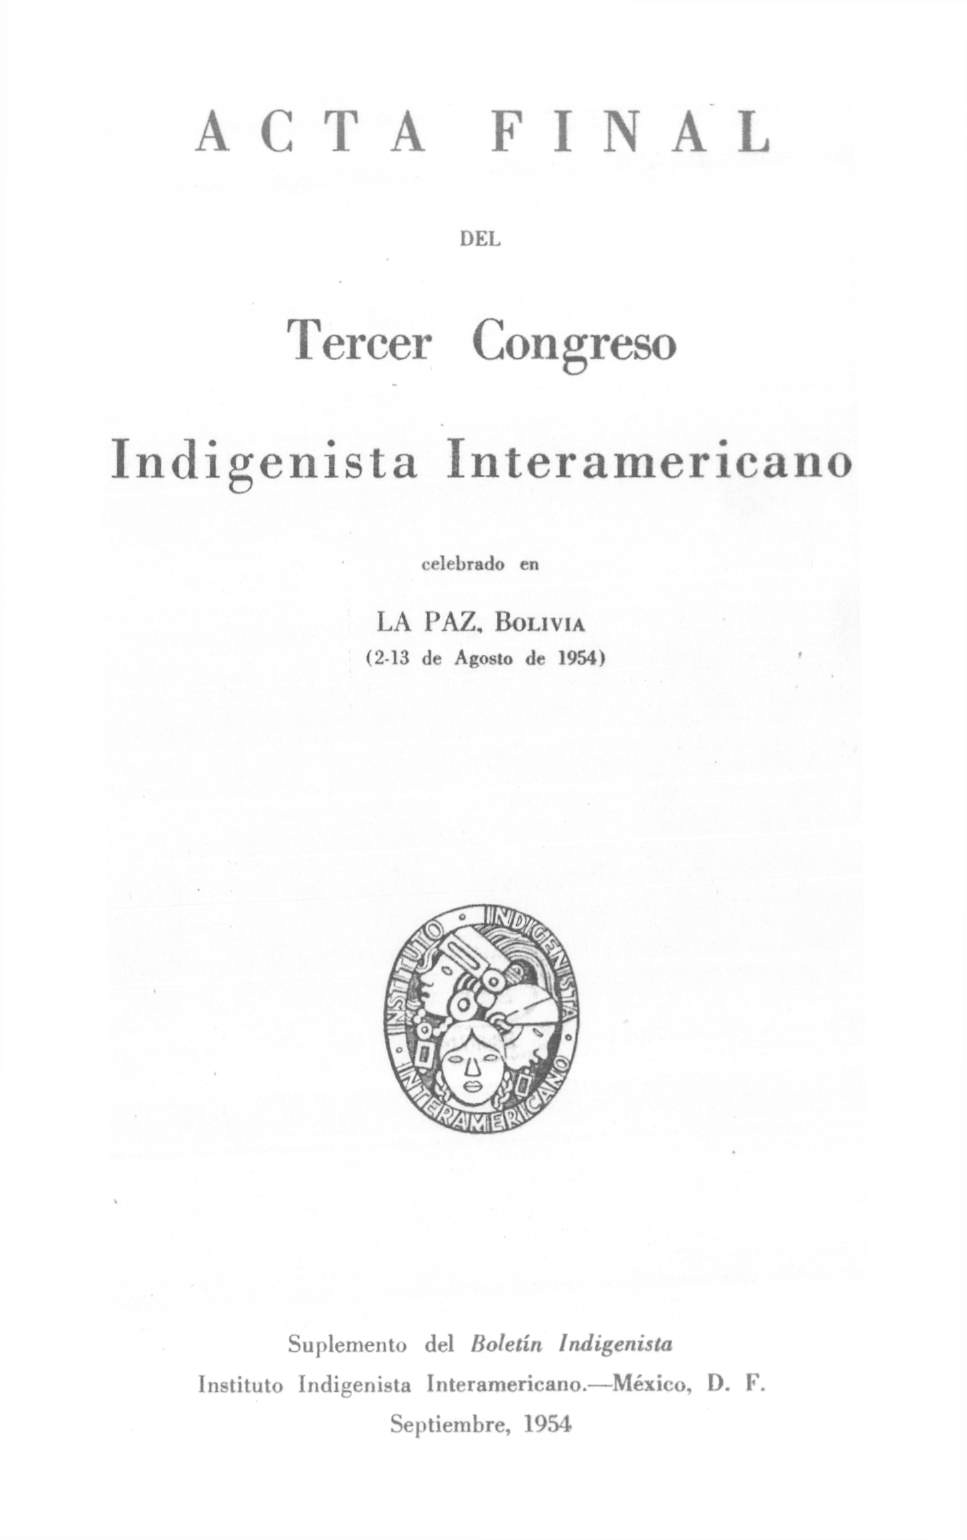 Acta Final del Tercer Congreso Indigenista Interamericano /